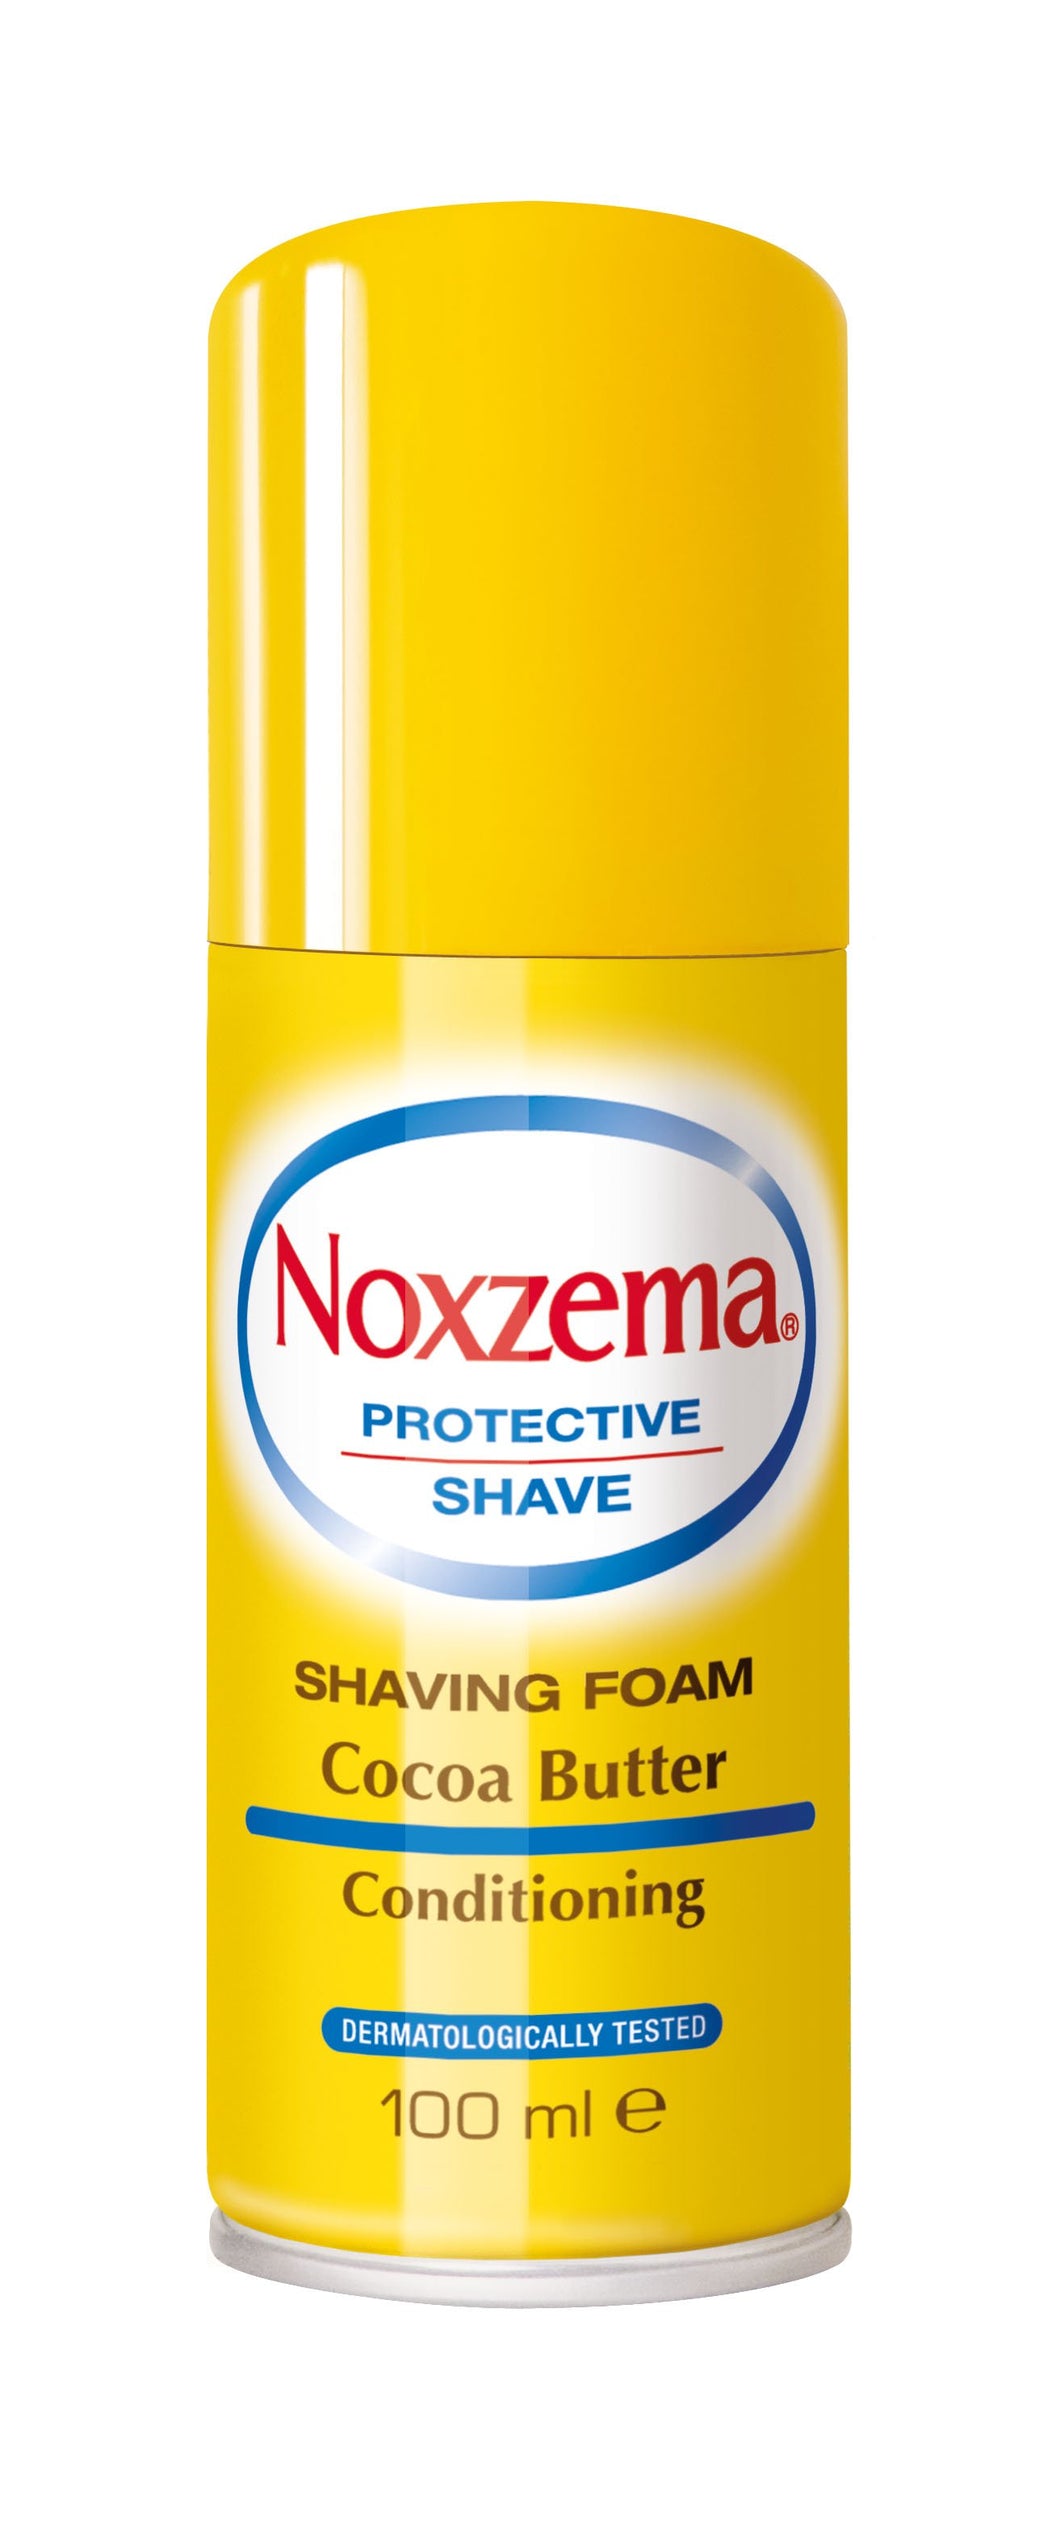 Noxzema Shaving Foam Cocoa Butter 100ml (travel size)